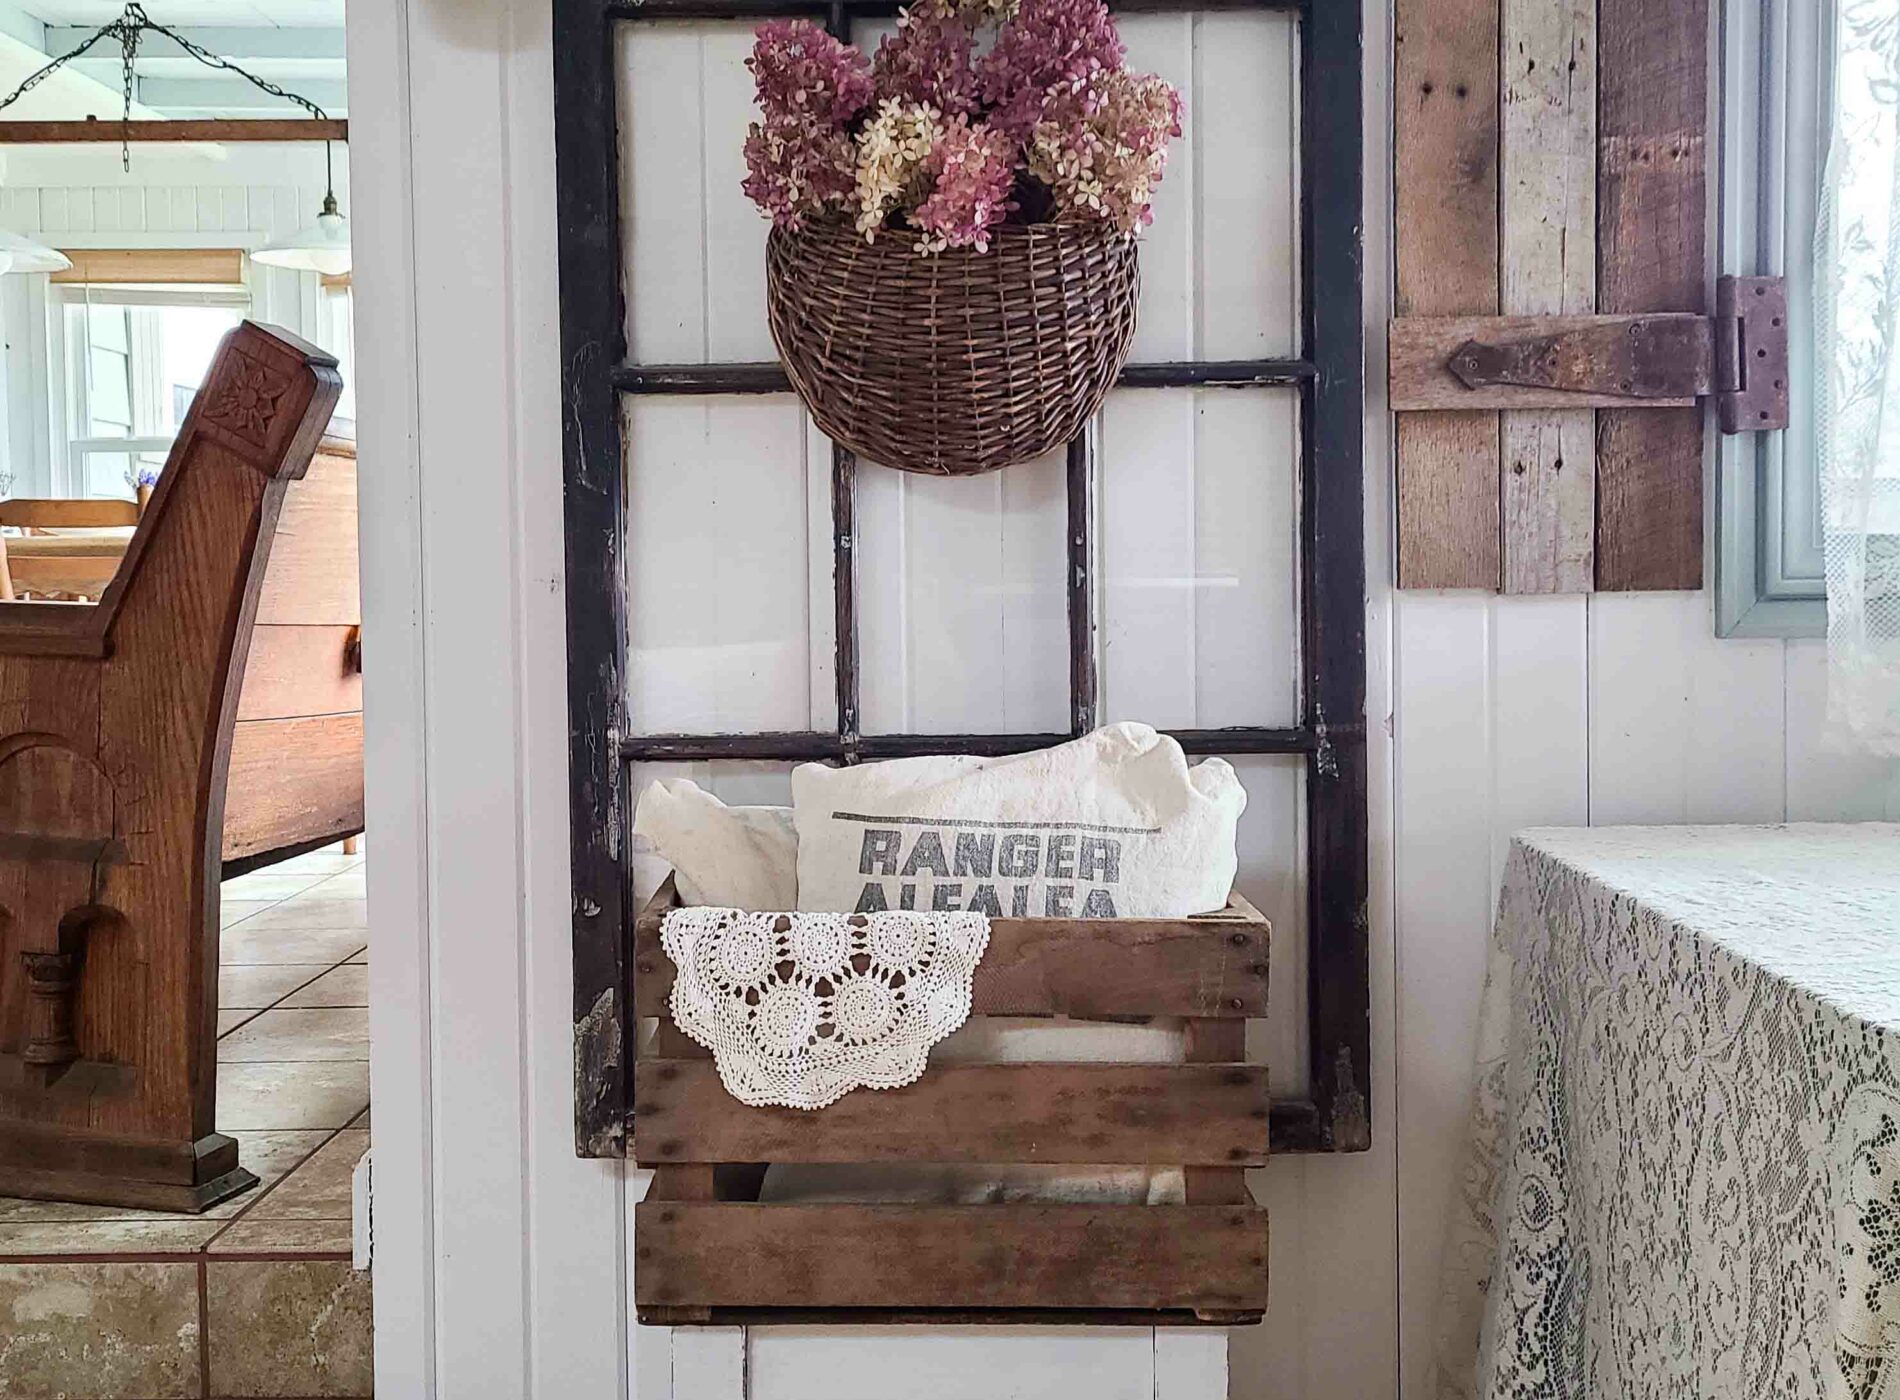 Farmhouse Antique Crate Stand Table available at Prodigal Pieces | shop.prodigalpieces.com #prodigalpieces